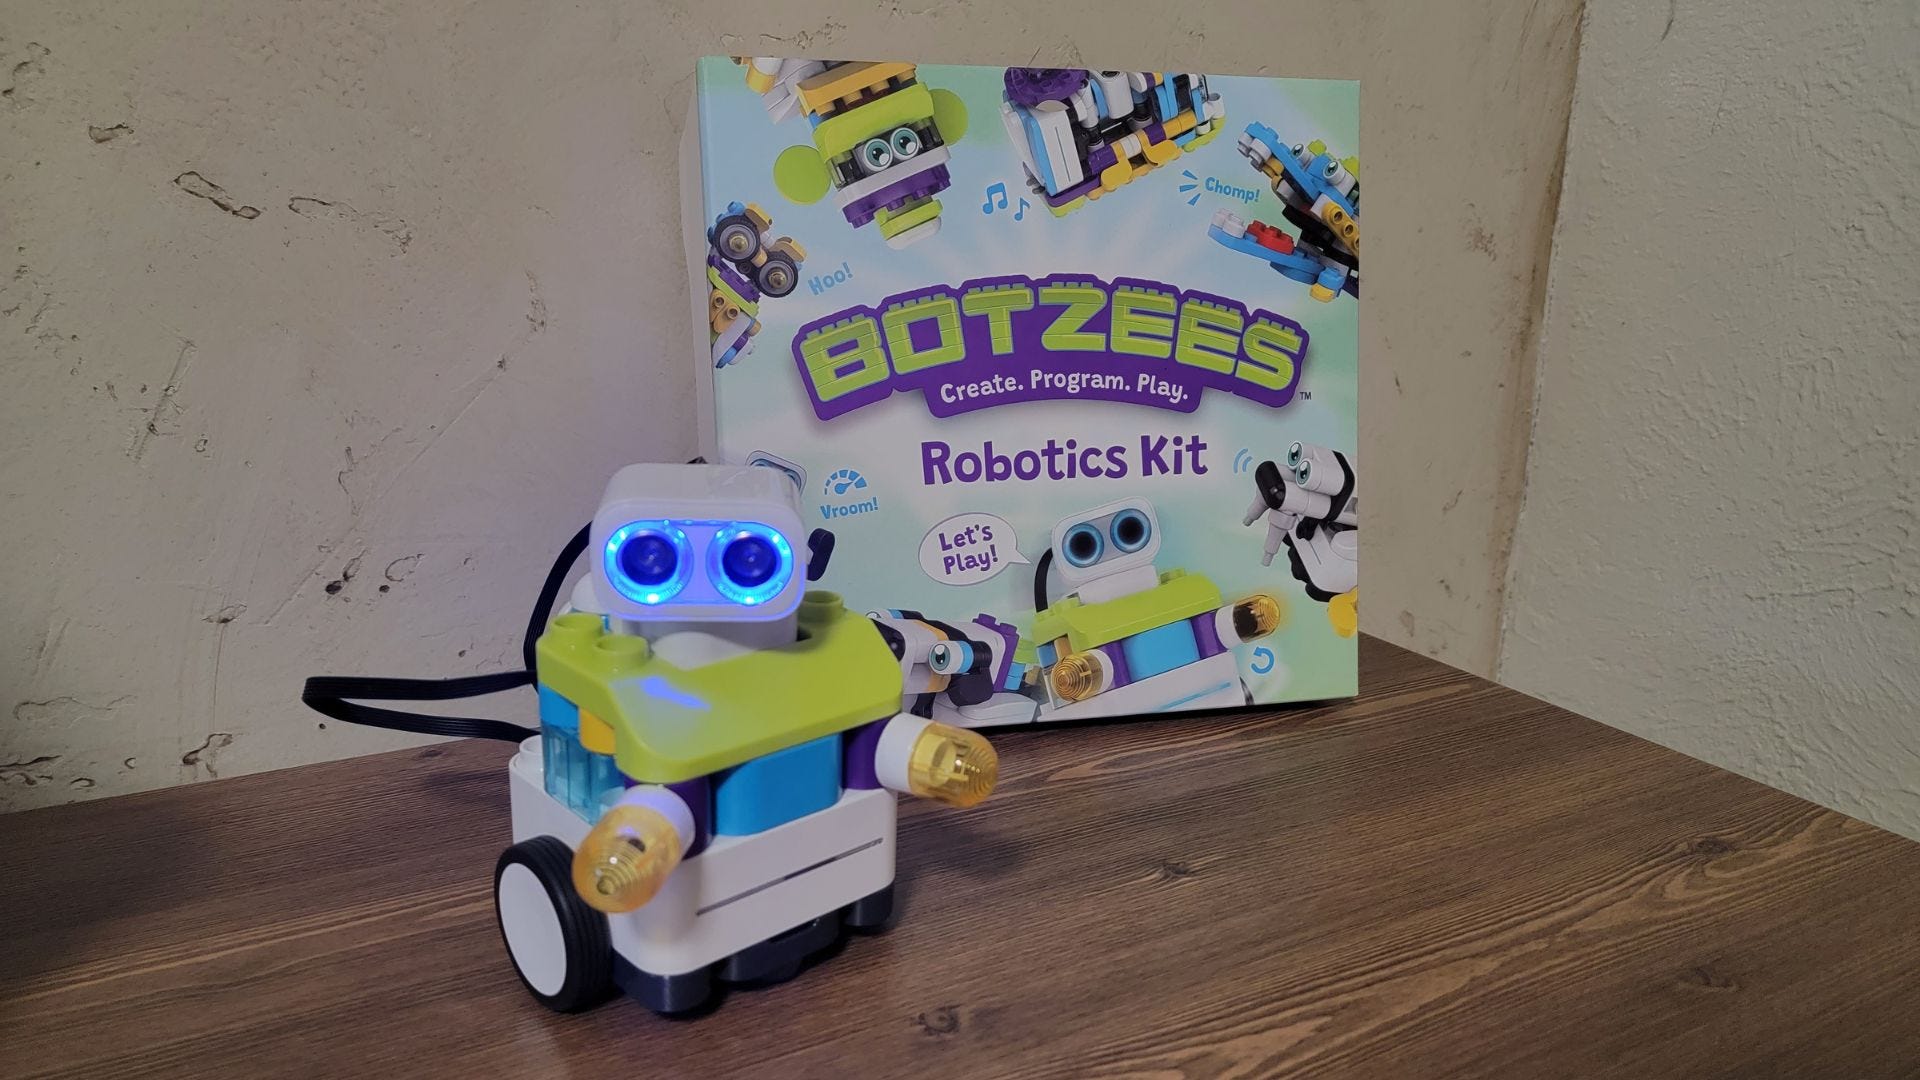 Botzees Robotics Kit Review: A Great Coding Tool For Young Kids